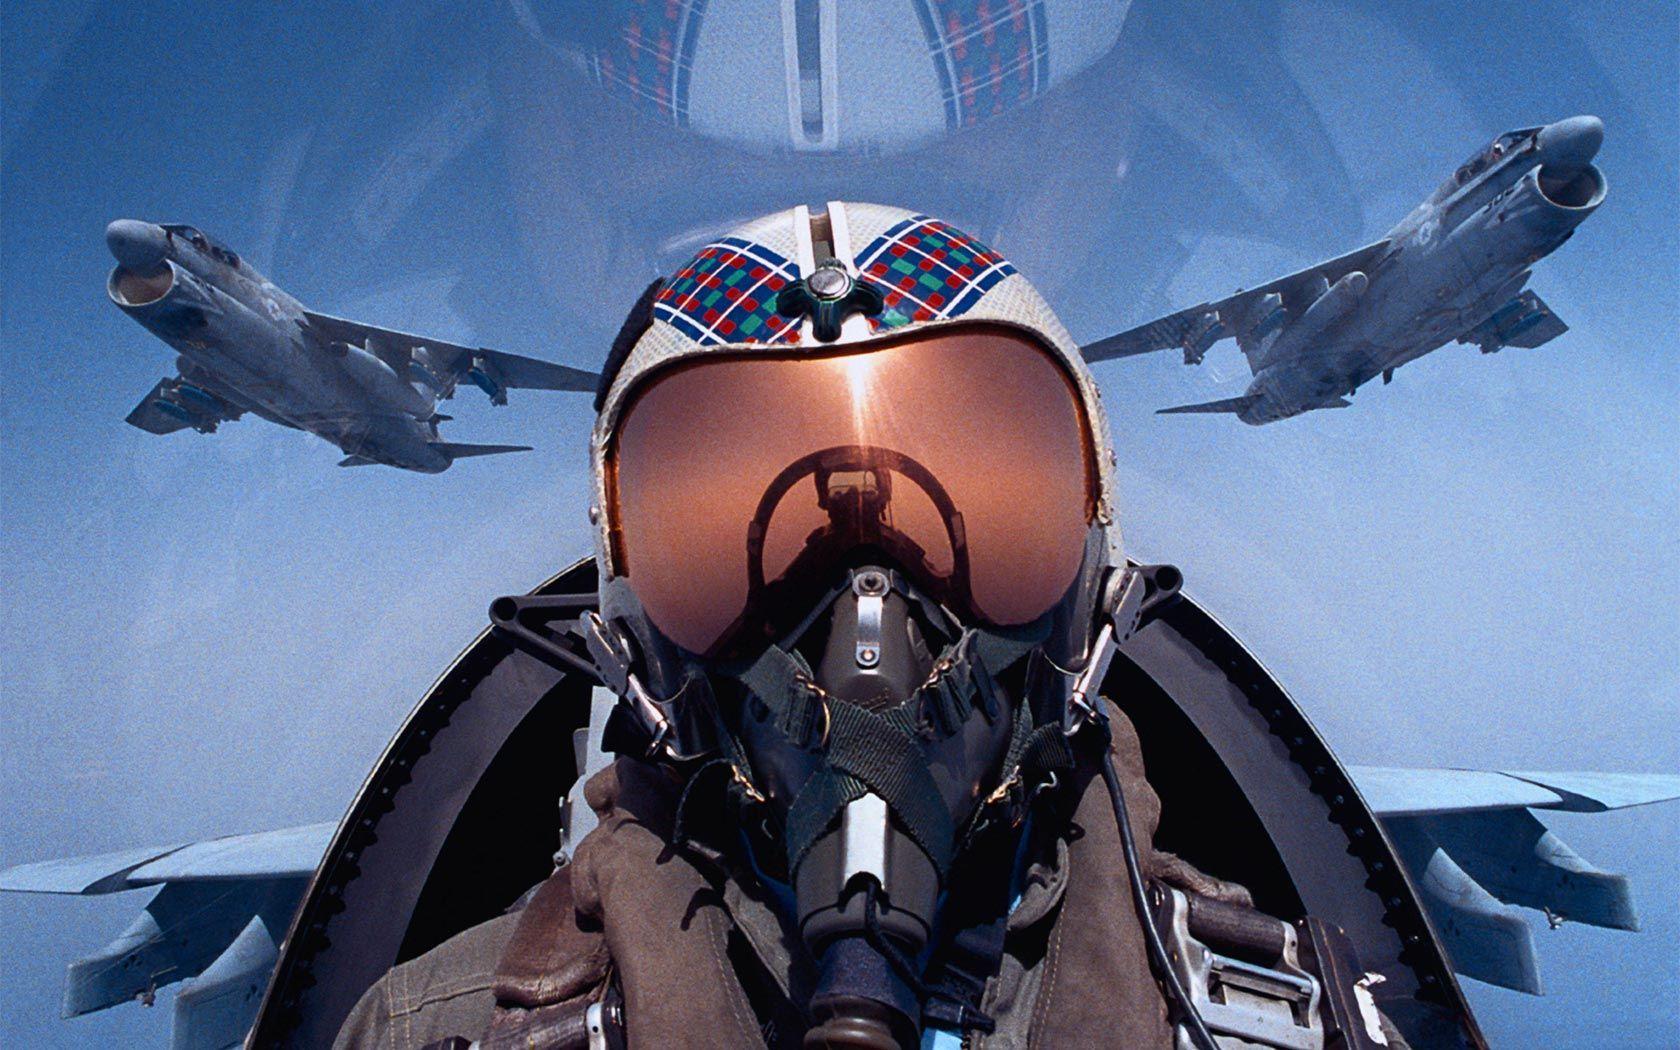 Fighter Jet Pilot HD iPhone Wallpaper. Fighter pilot, Fighter jets, Aviation